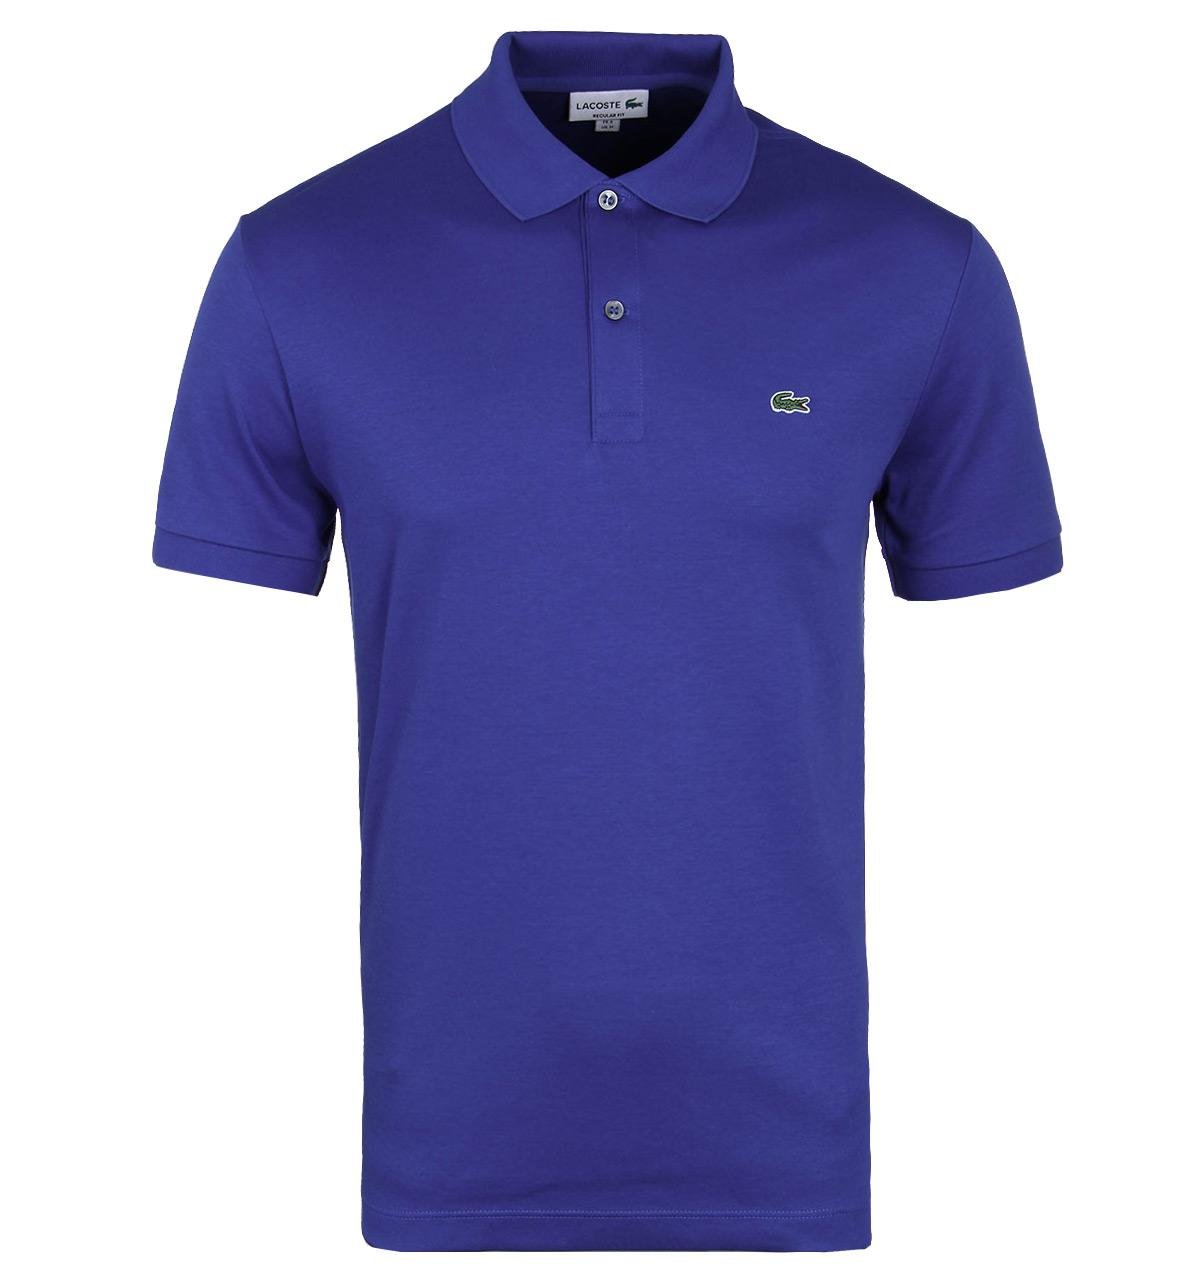 Lacoste Royal Blue Mercerised Cotton Polo Shirt for Men - Lyst